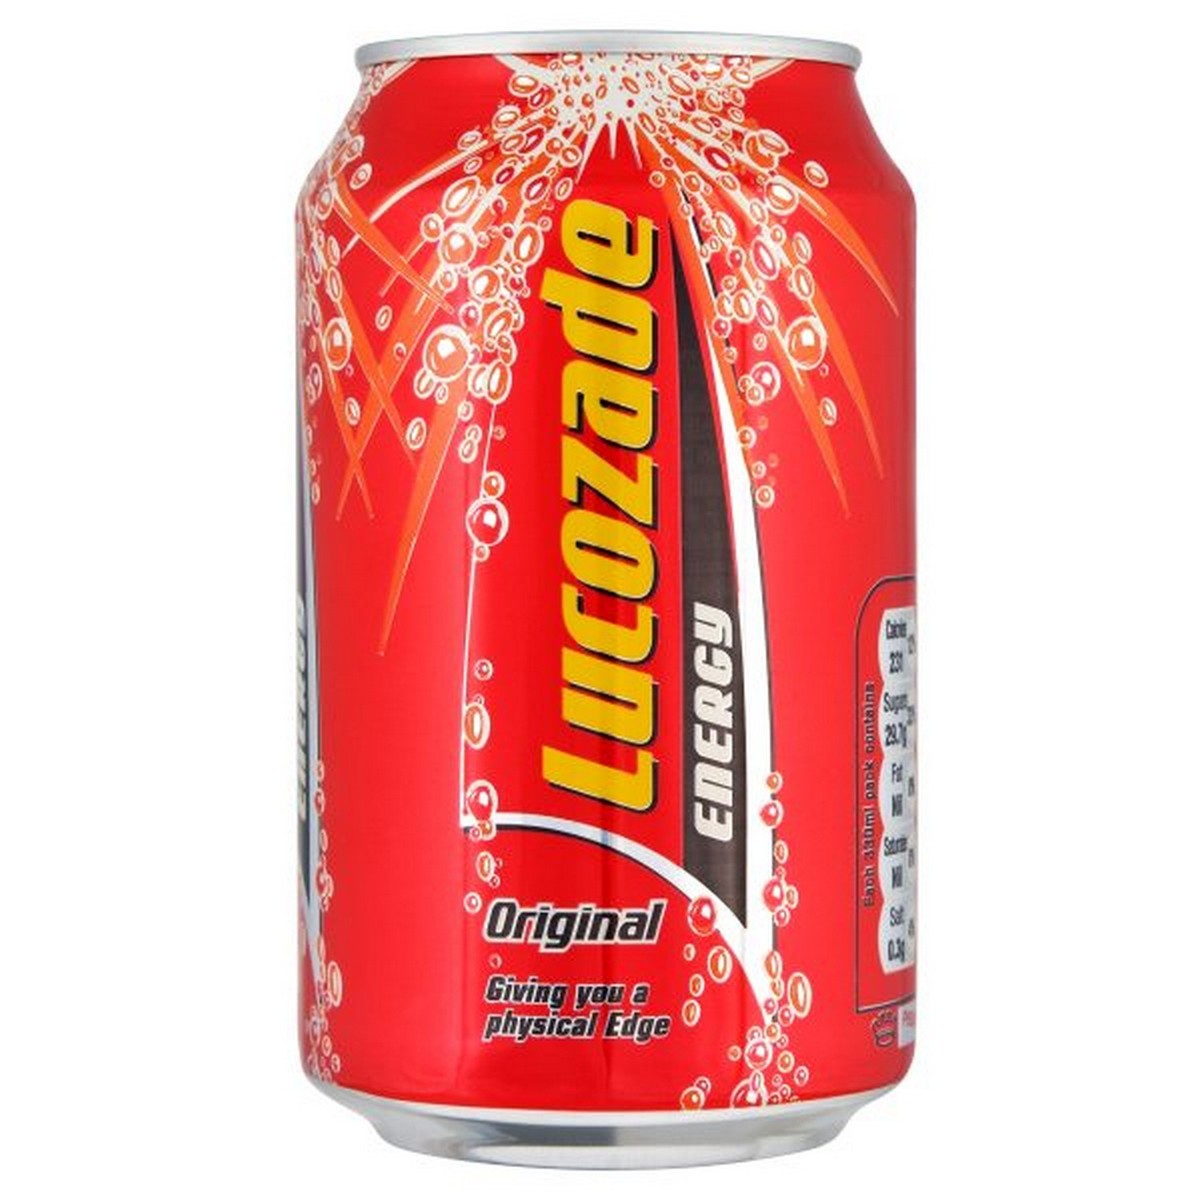 Lucozade Energy Drink Original Can 330ml